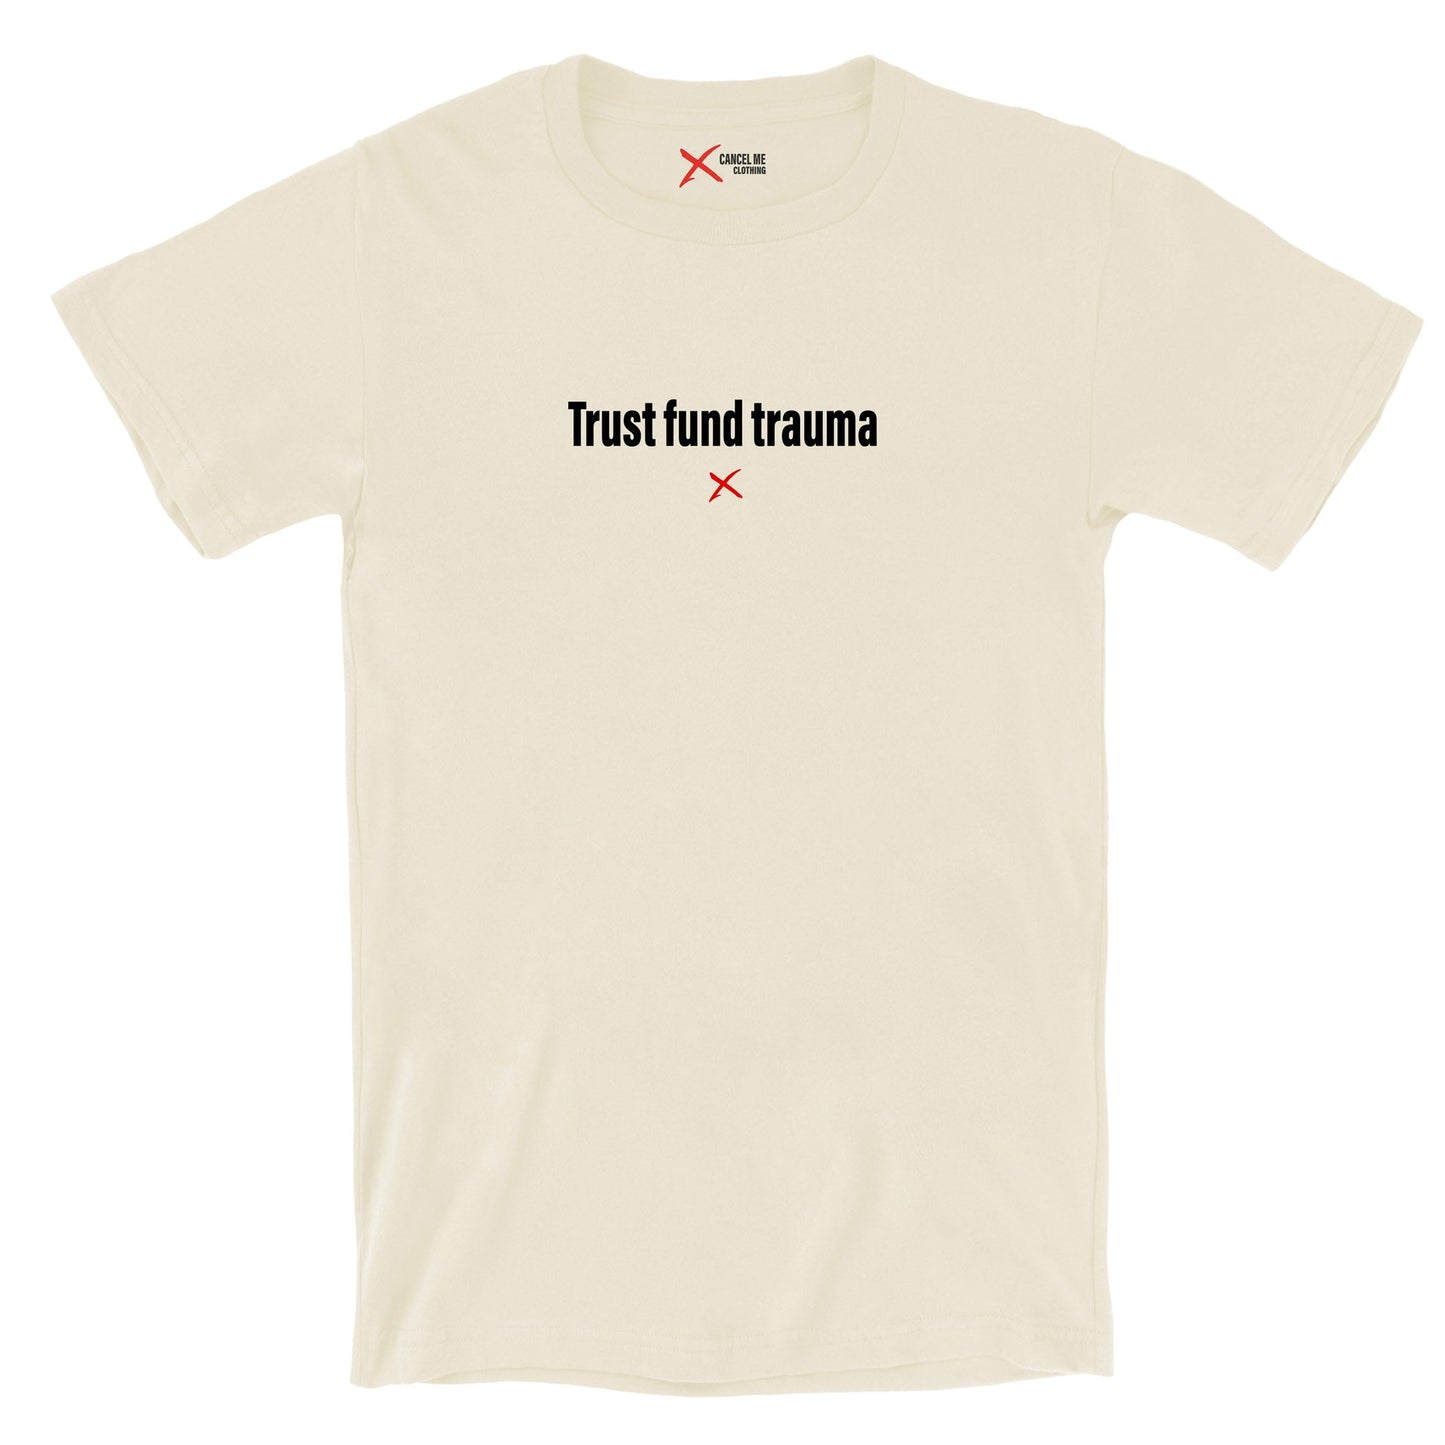 Trust fund trauma - Shirt